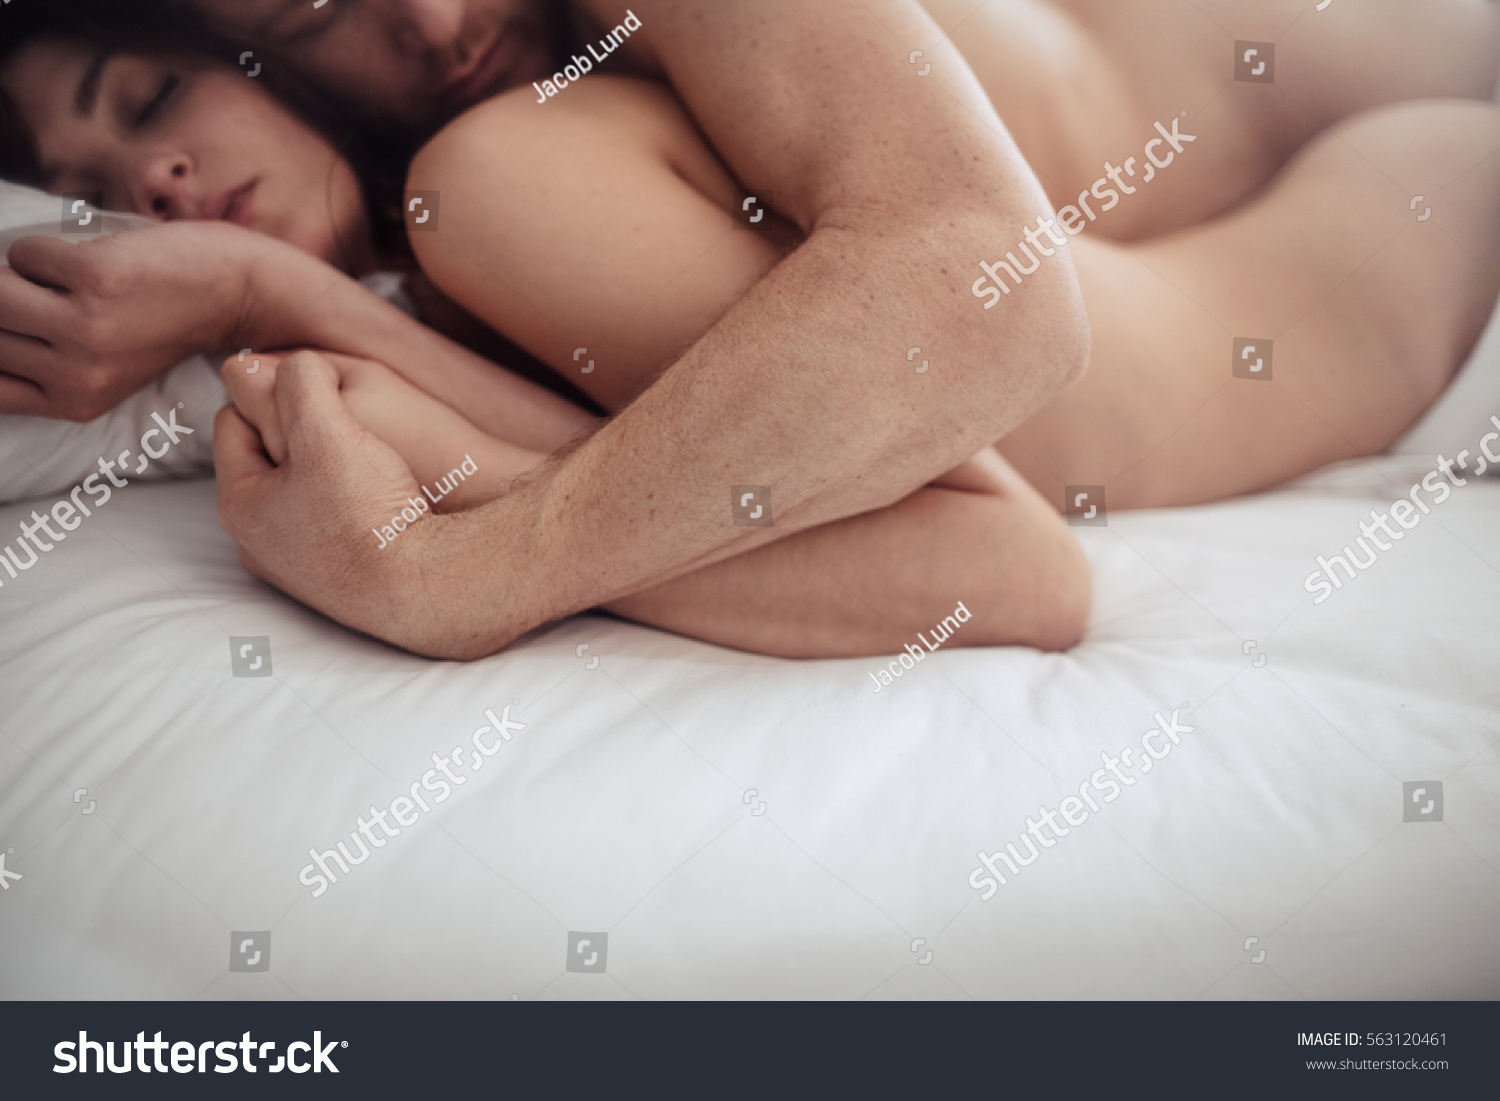 Woman Making Sex 13